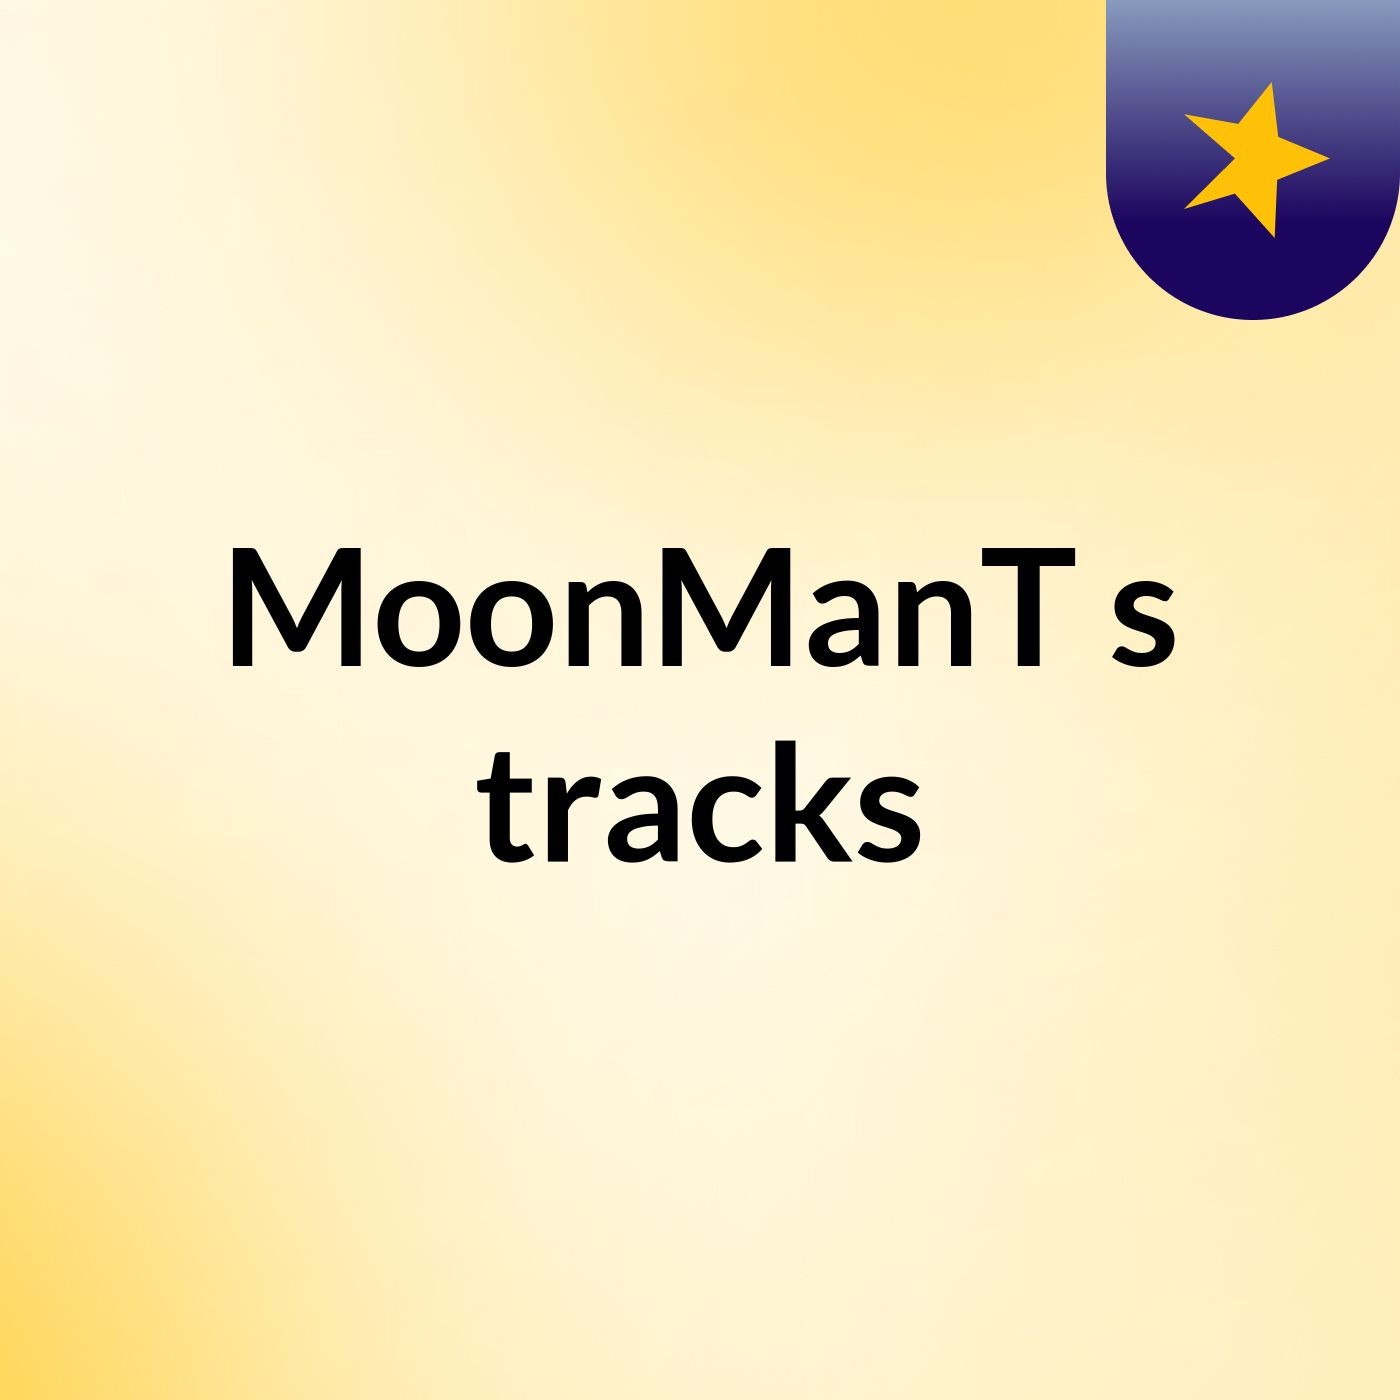 MoonManT's tracks